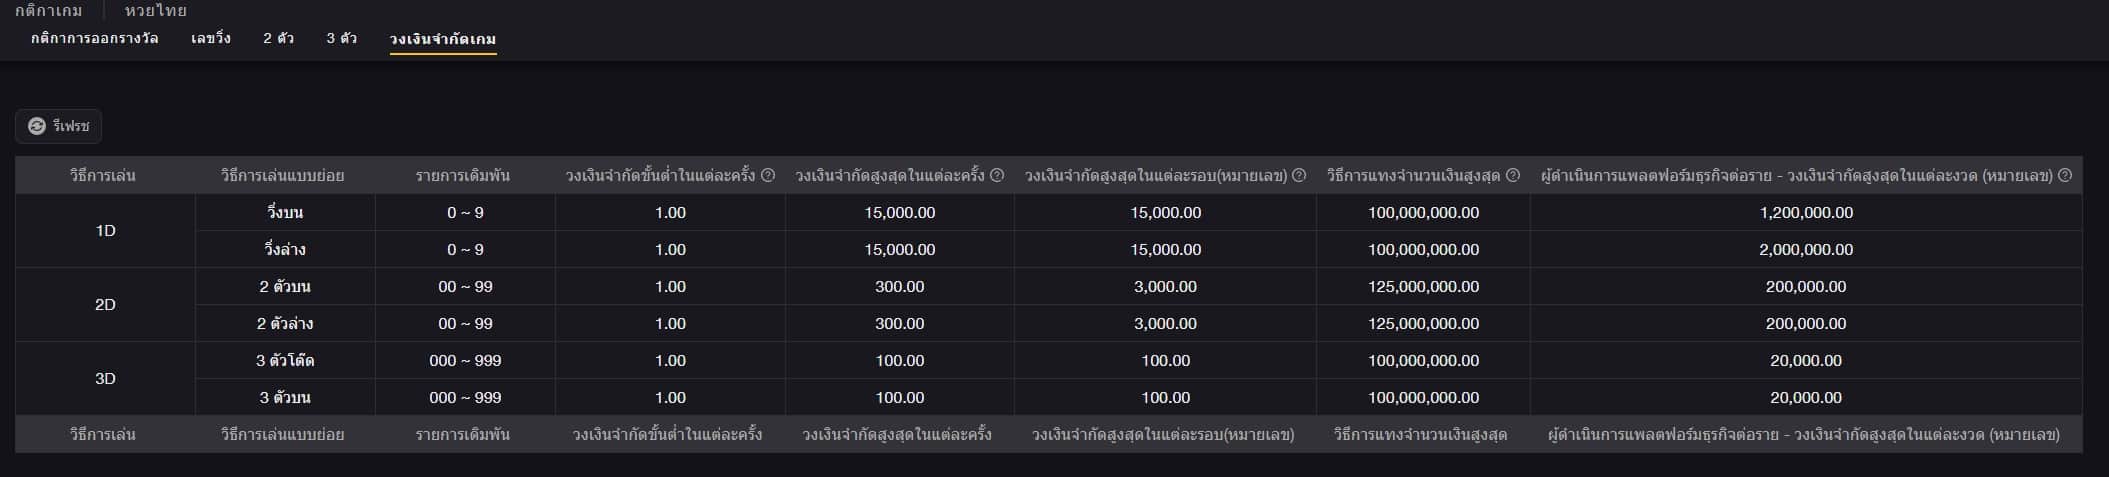 lotto thai bet 11